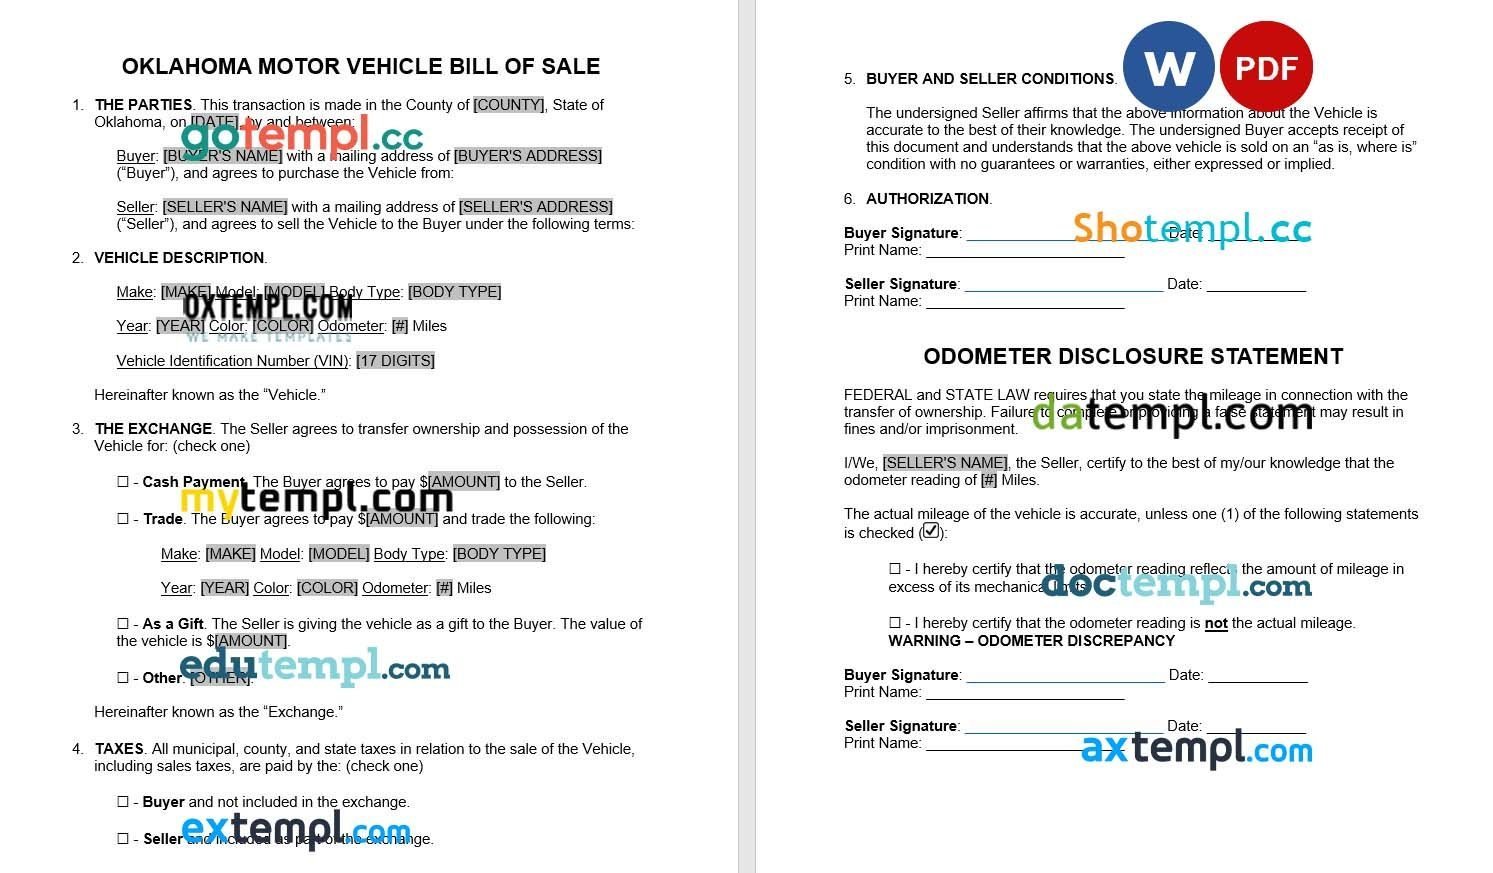 Oklahoma Motor Vehicle Bill of Sale example, fully editable